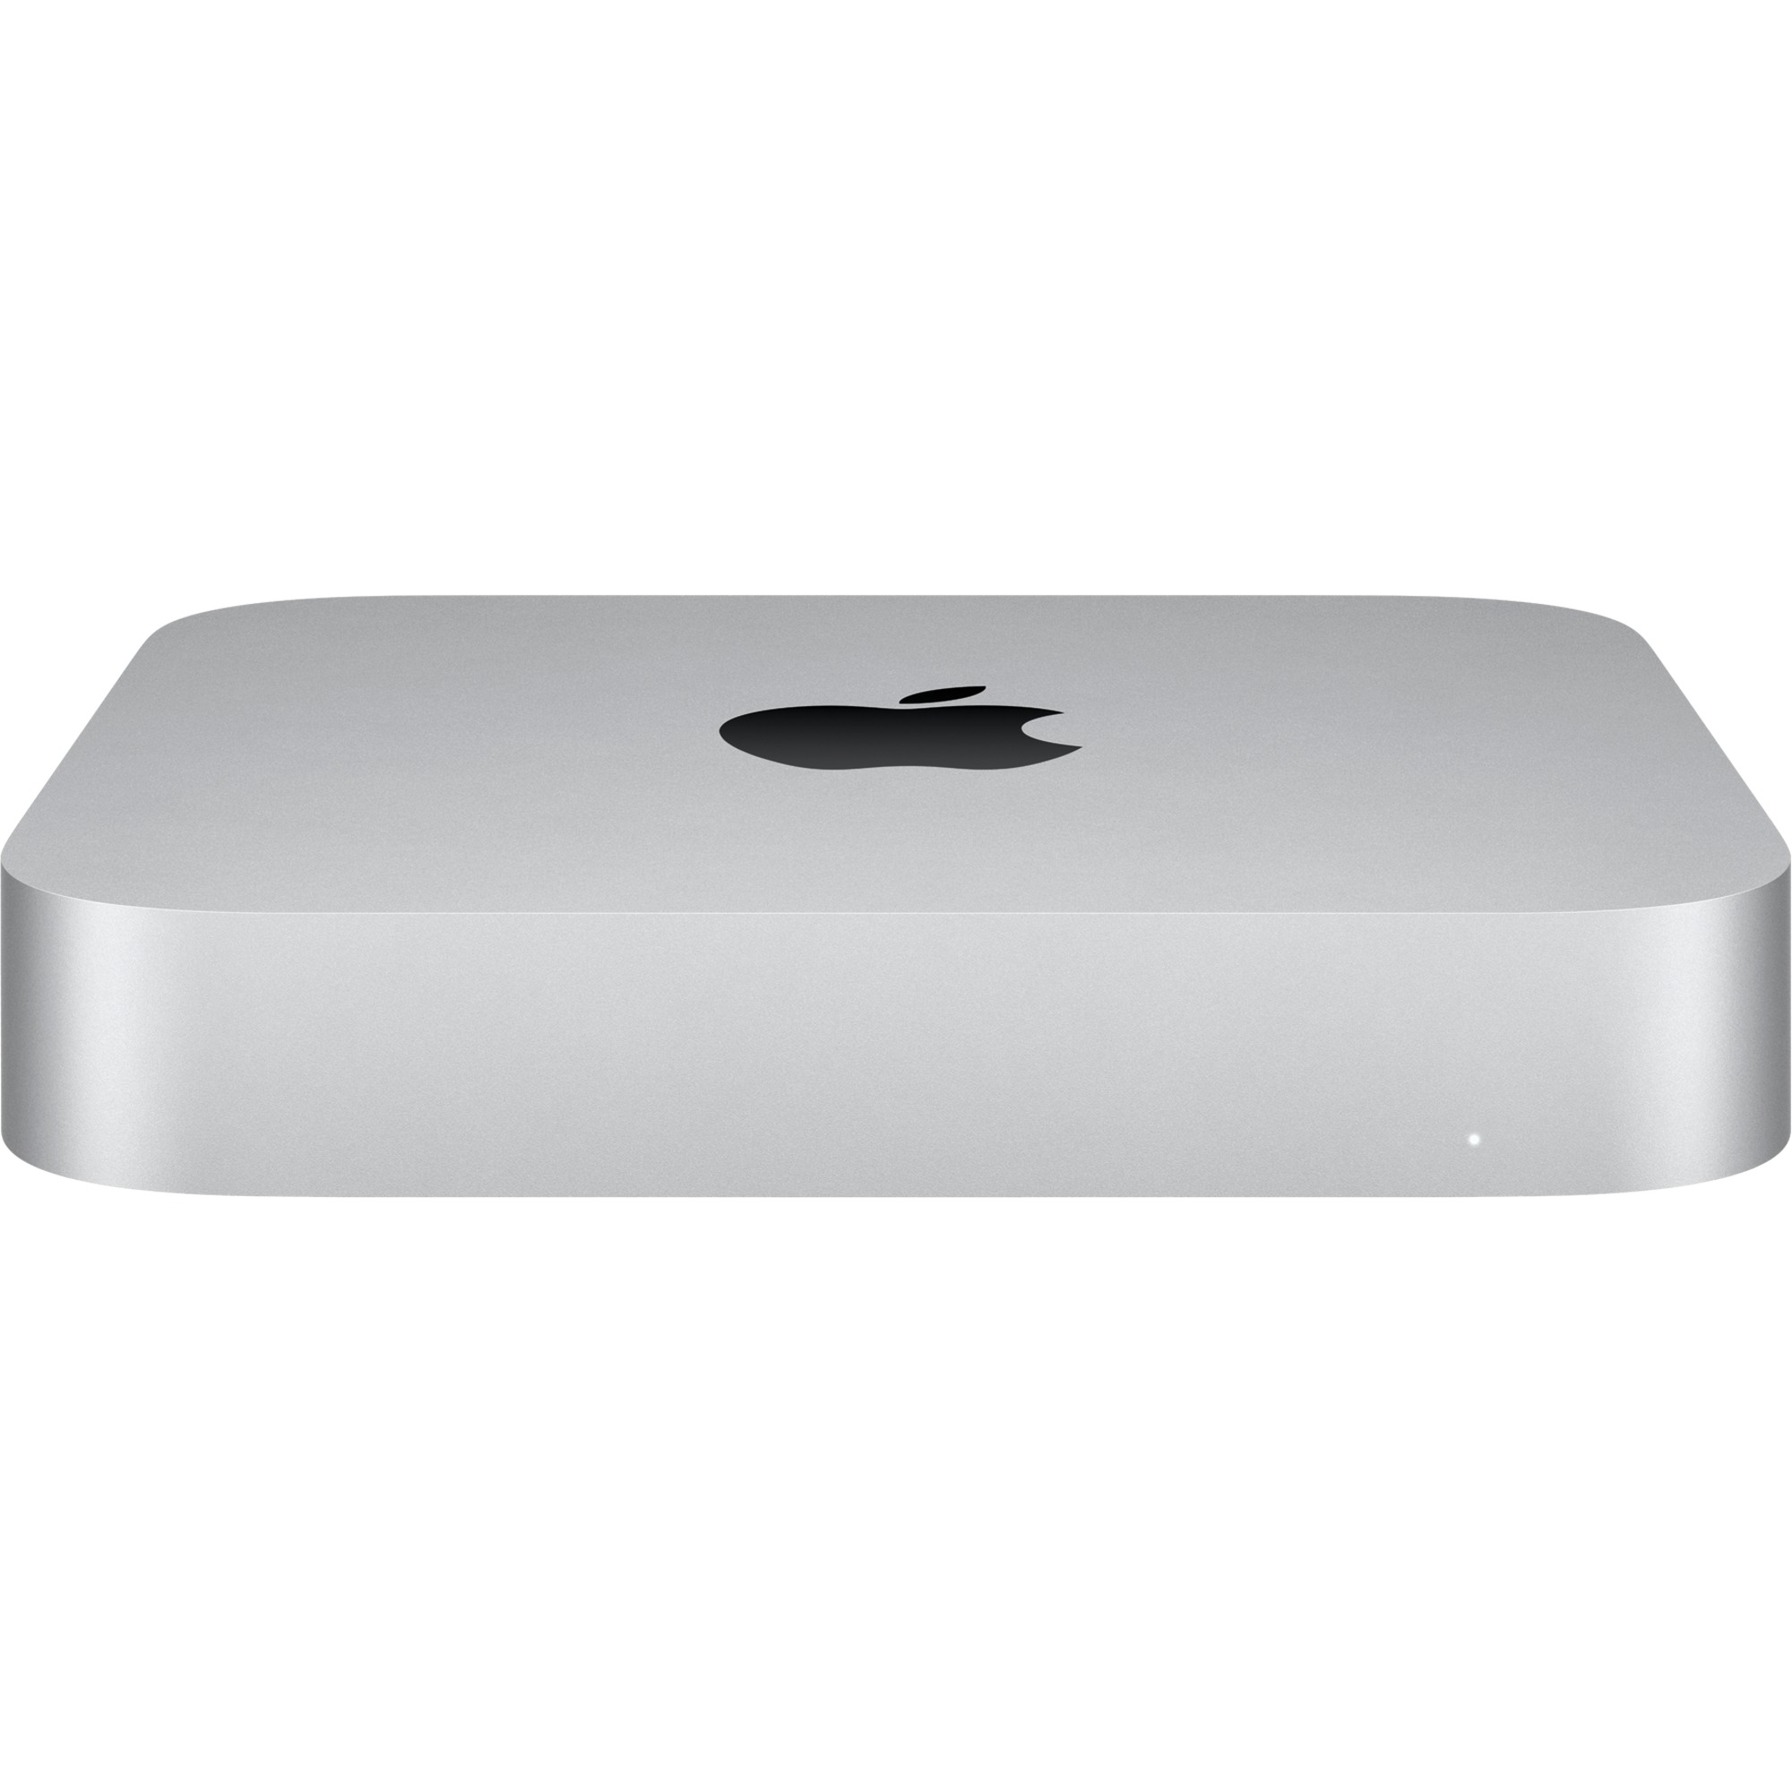 Image of Alternate - Mac mini M1 8-Core, MAC-System online einkaufen bei Alternate